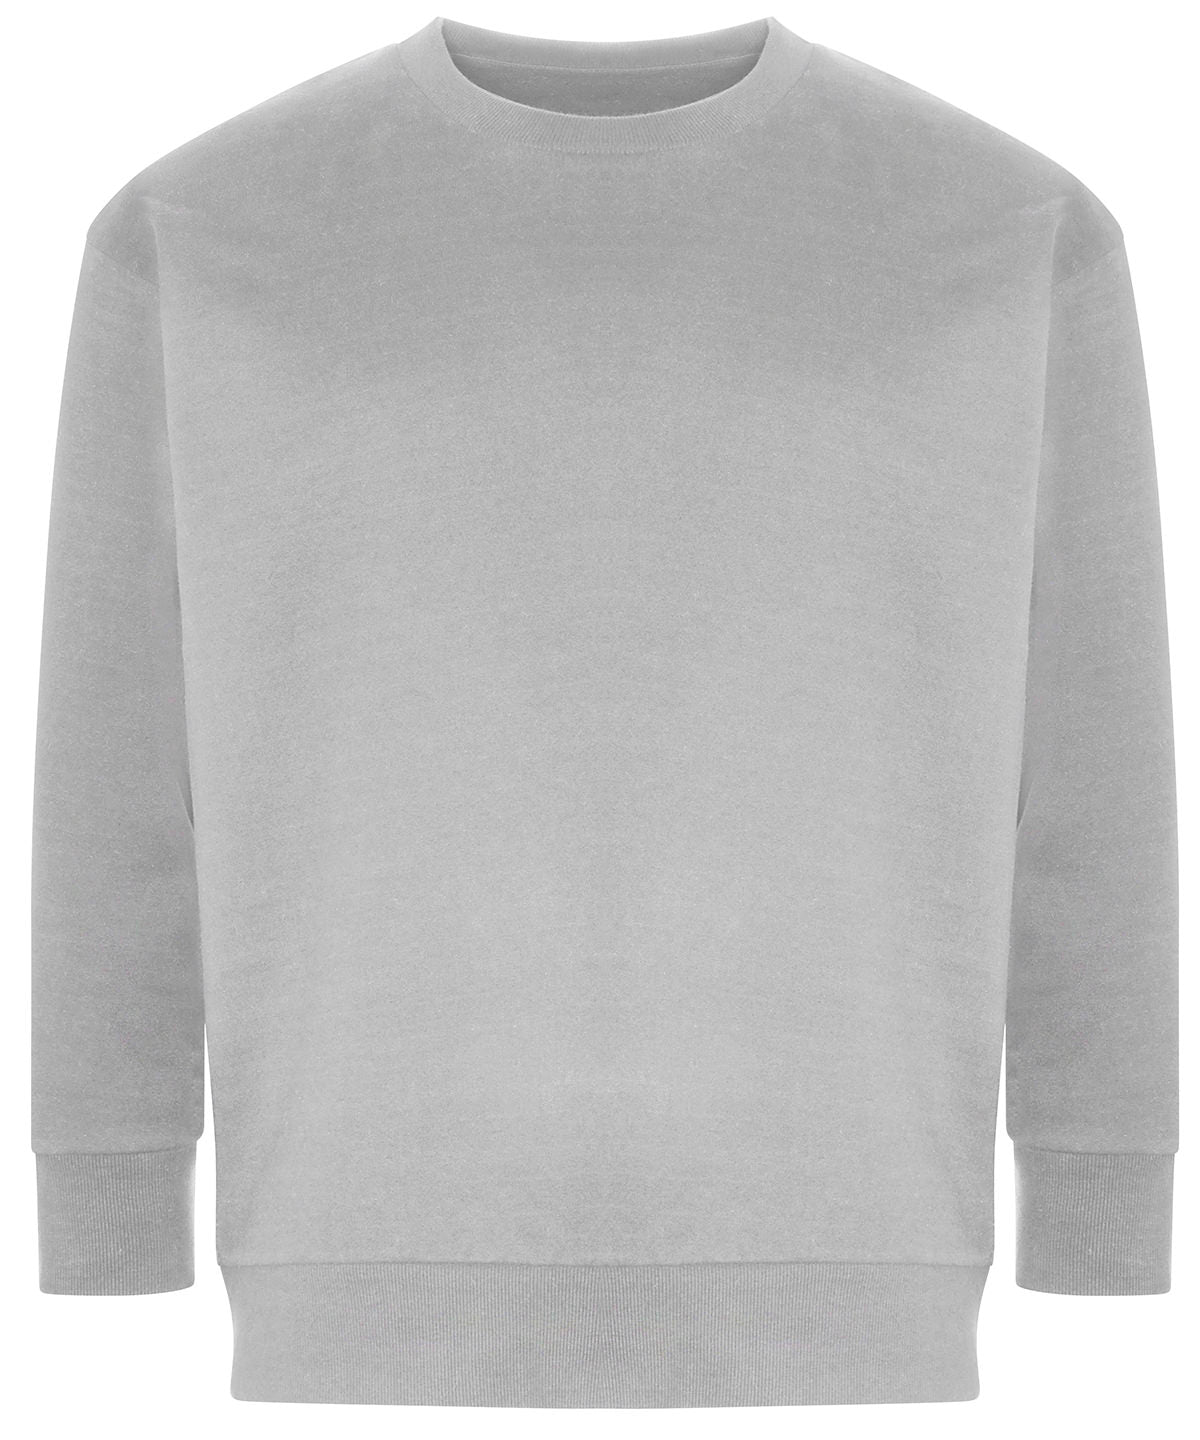 Personalised Sweatshirts - Black AWDis Ecologie Crater recycled sweatshirt